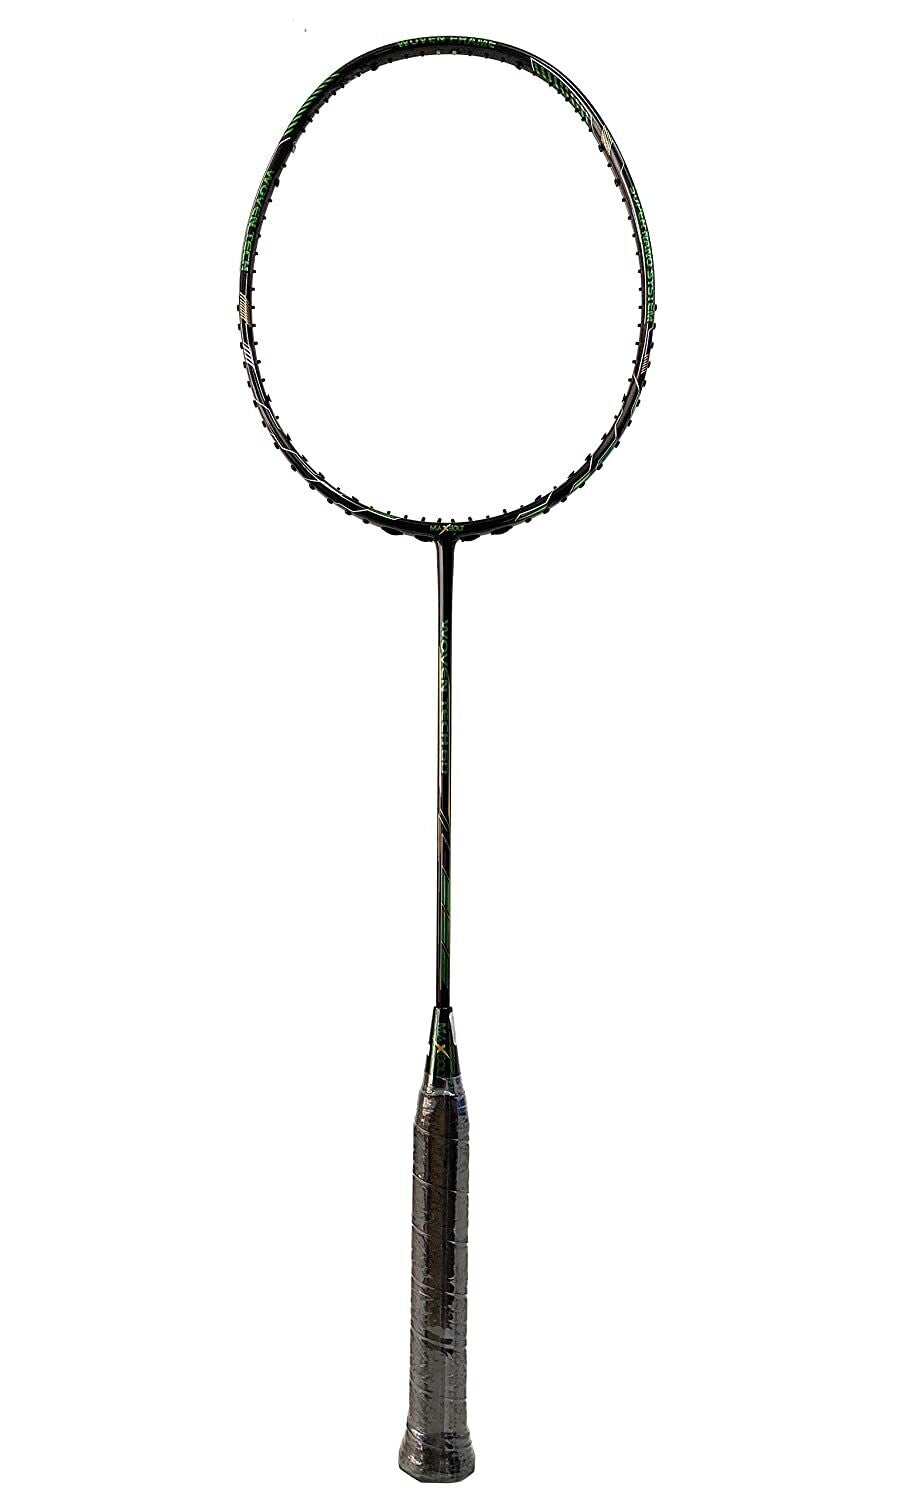 Maxbolt Woven Tech 60 Badminton Racket - Green/Black